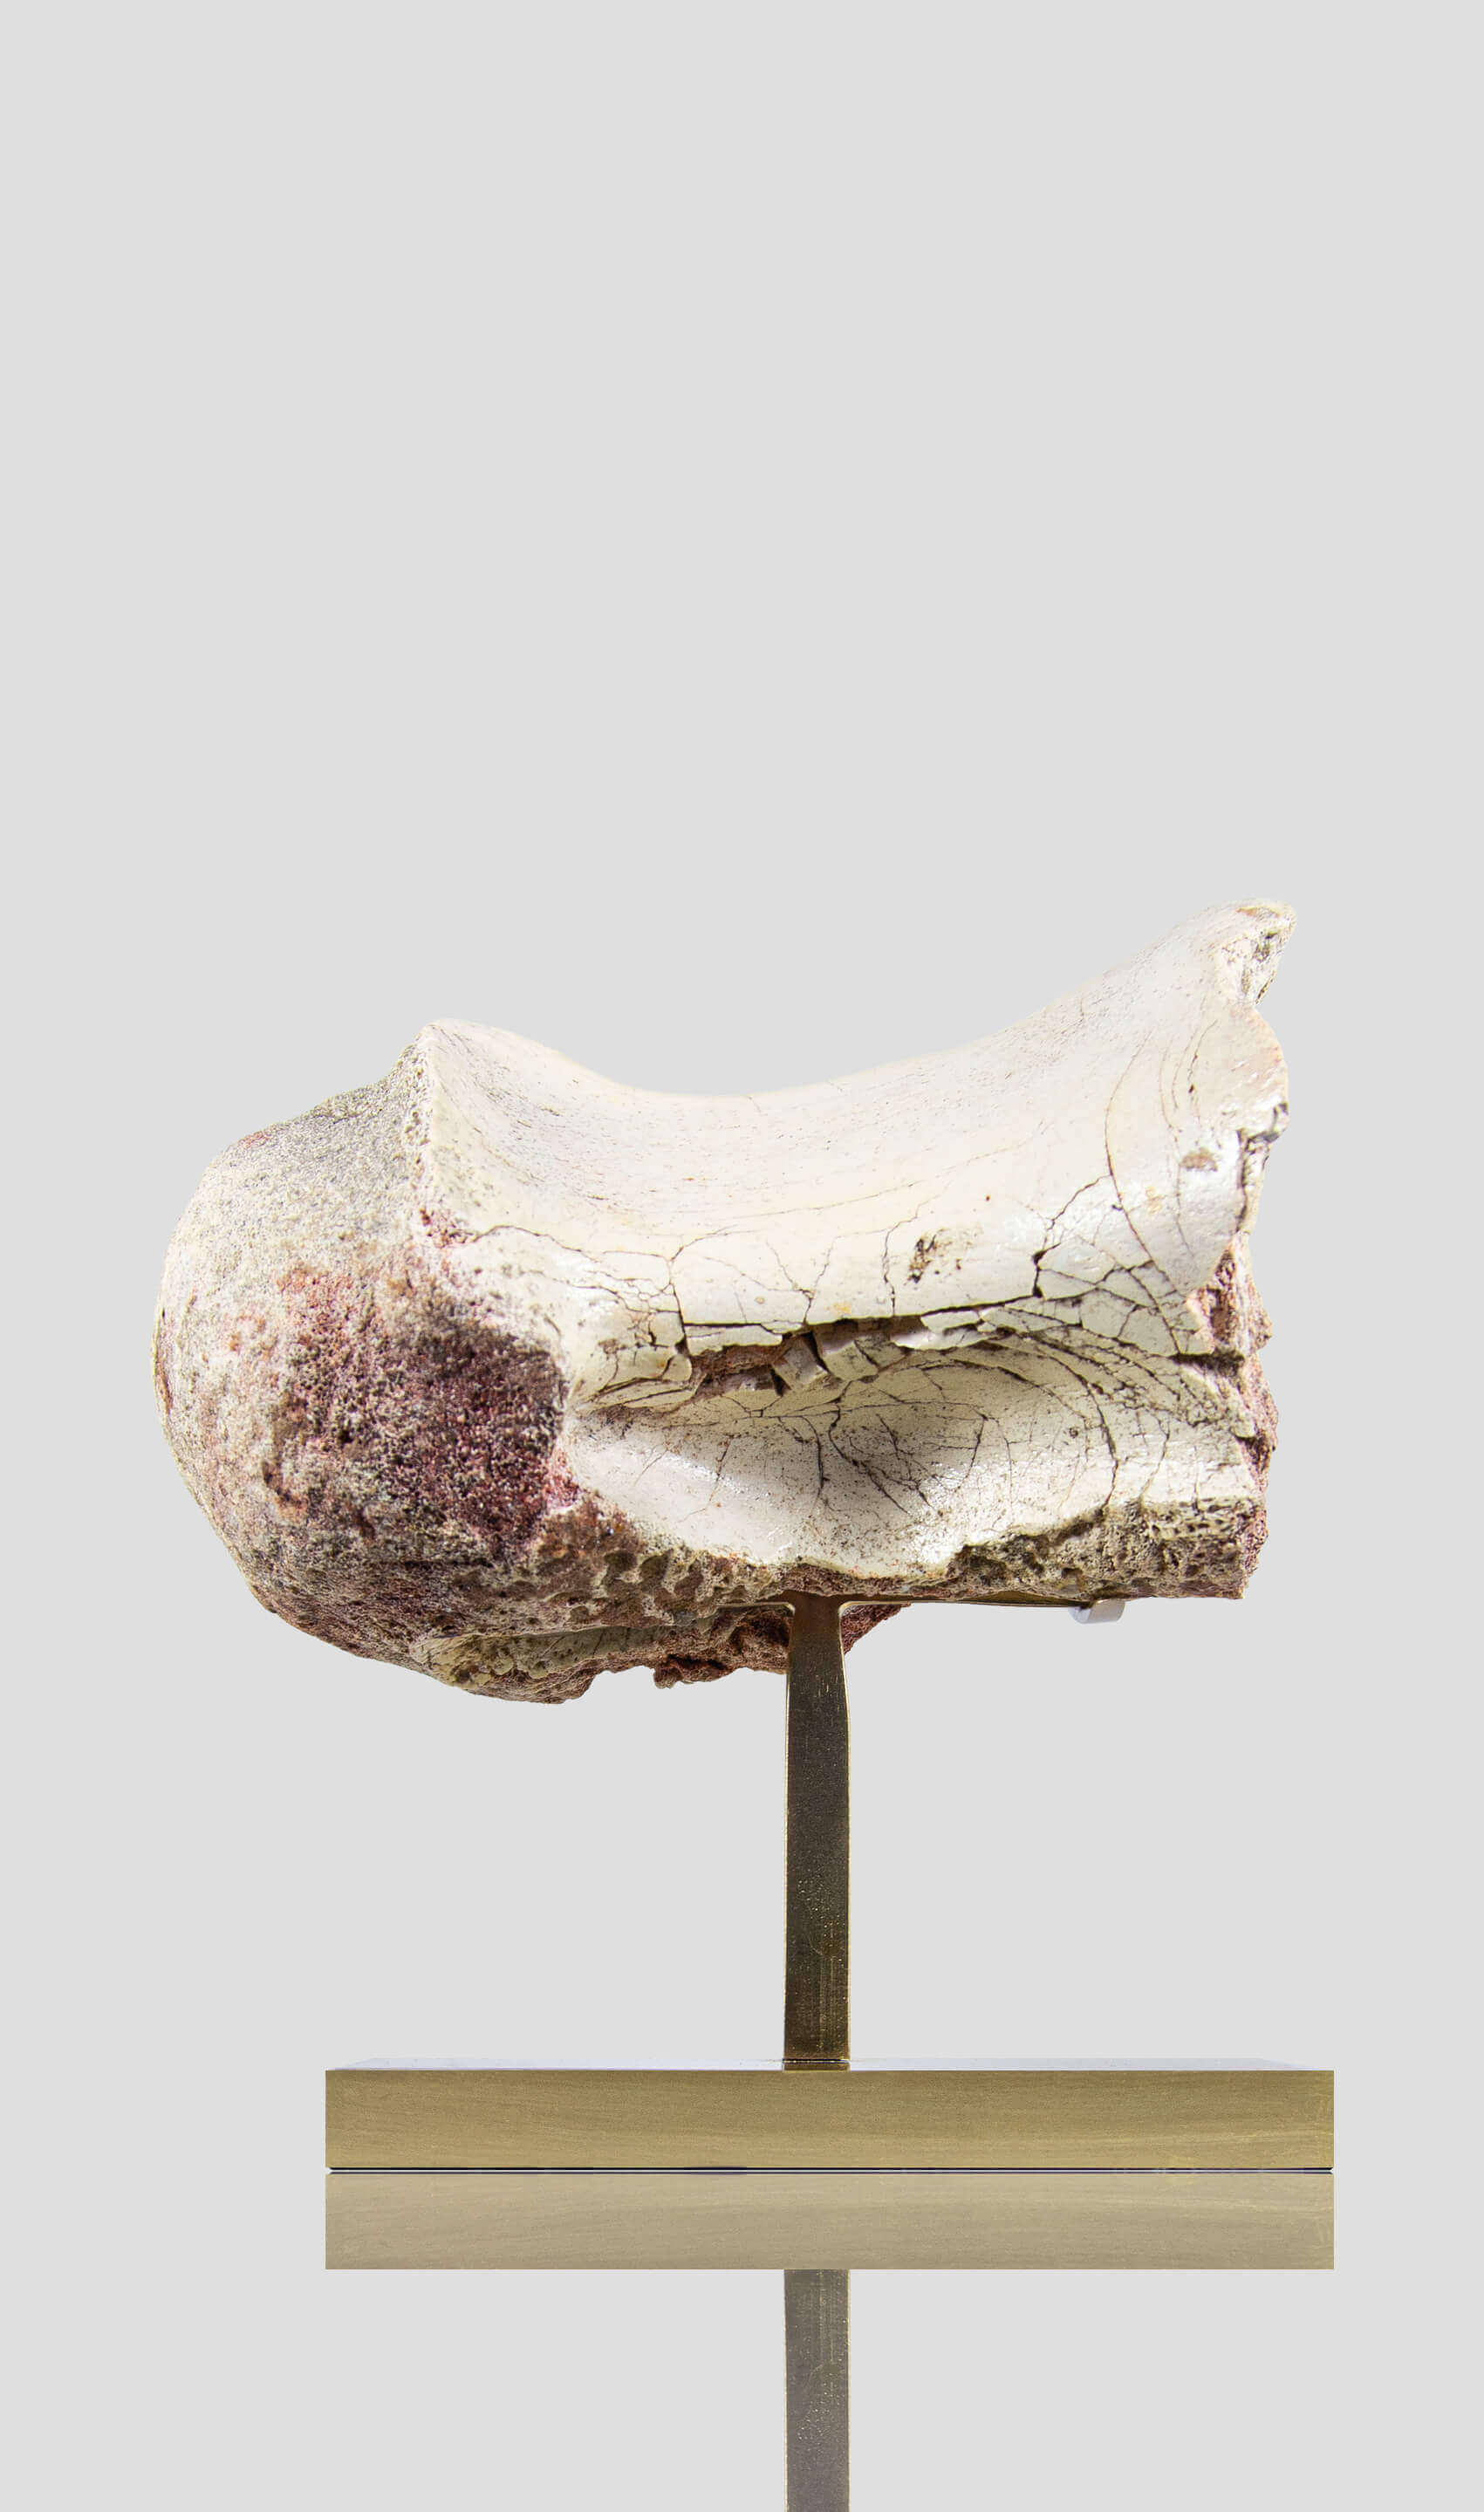 white spinosaurus dinosaur vertebra for sale on brass stand 01